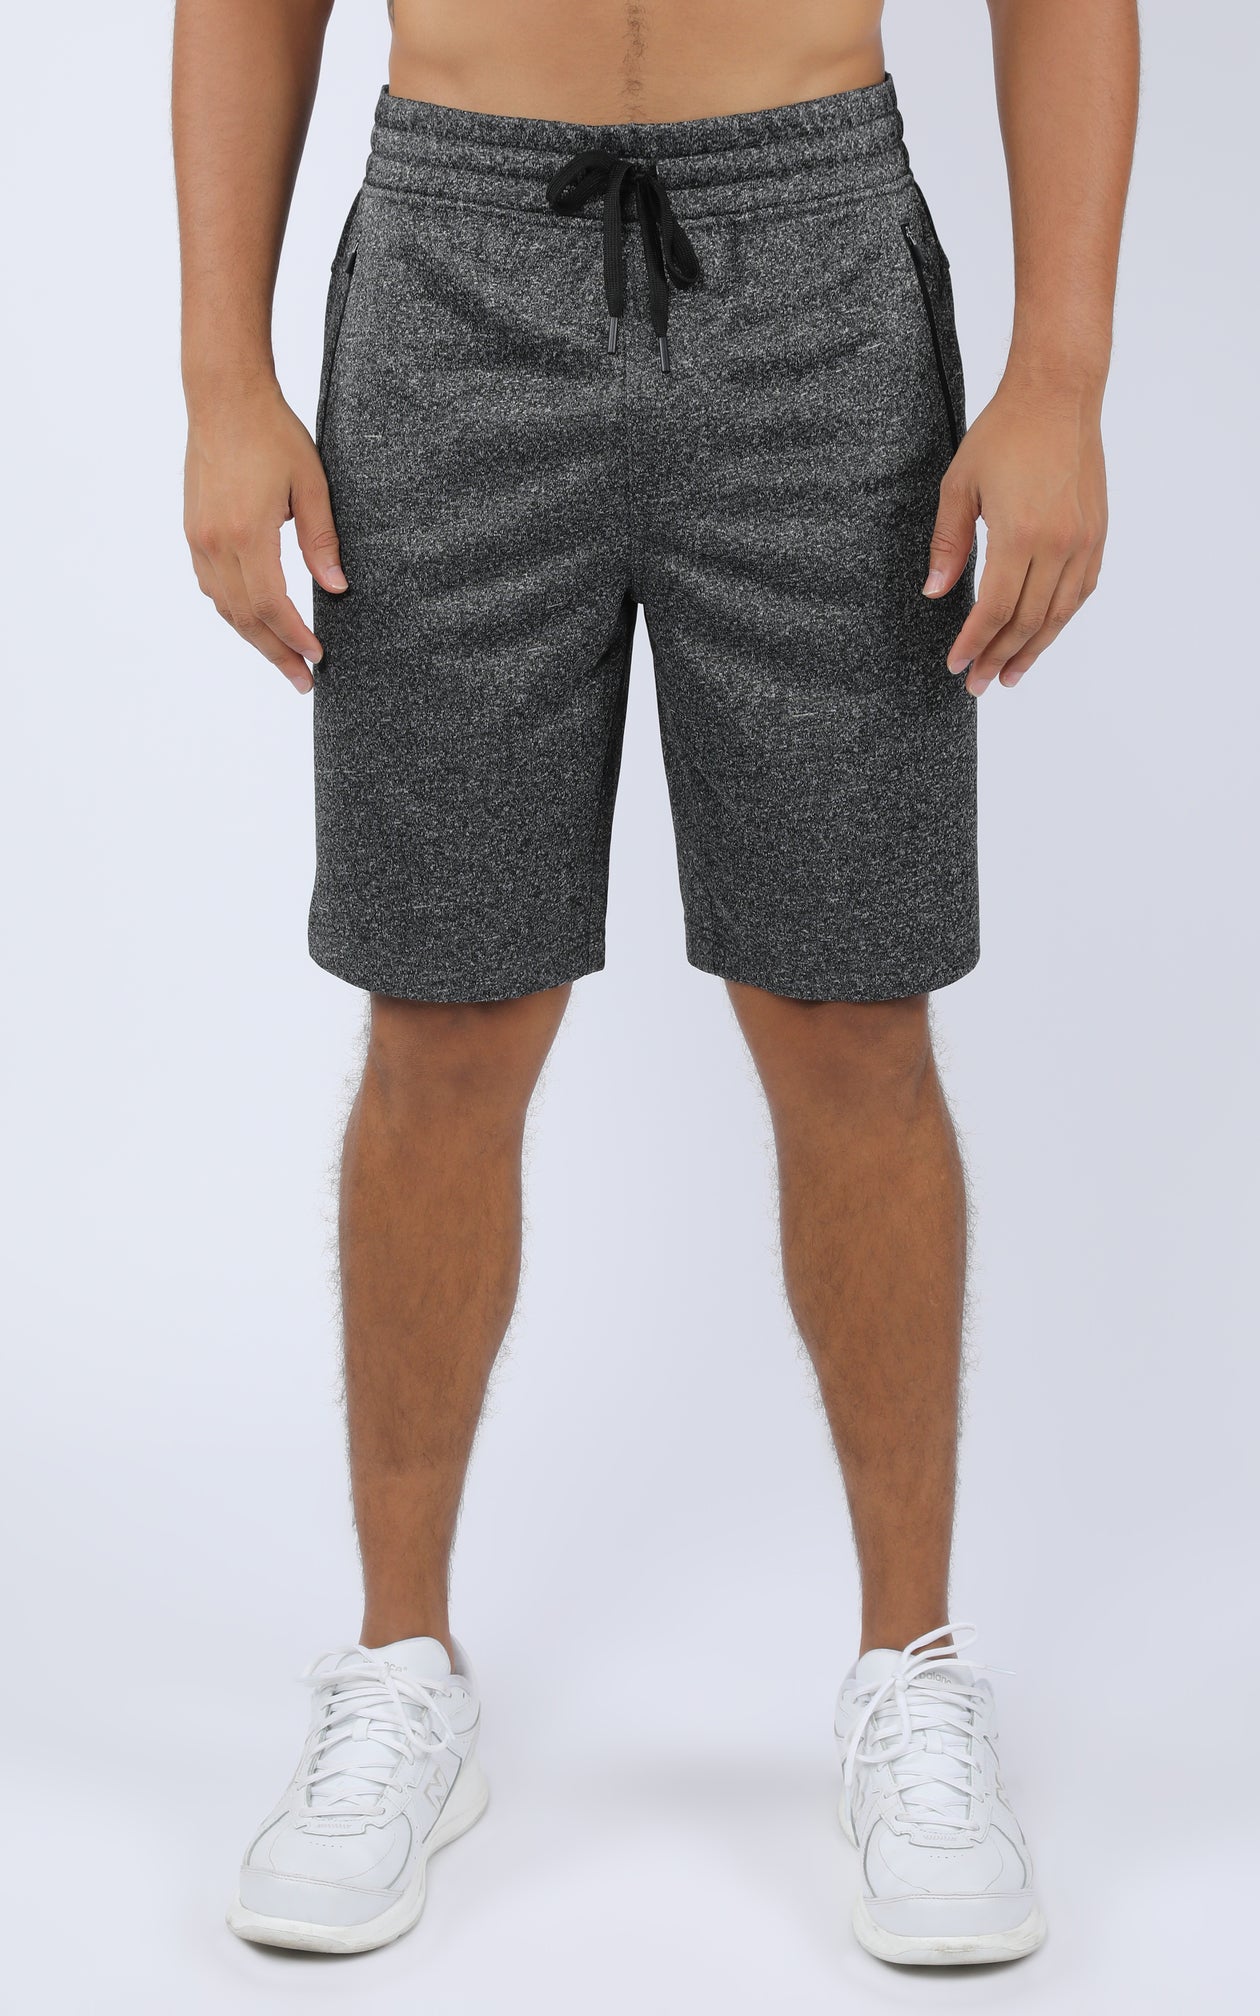 Men's Shorts With Zipper Pocket